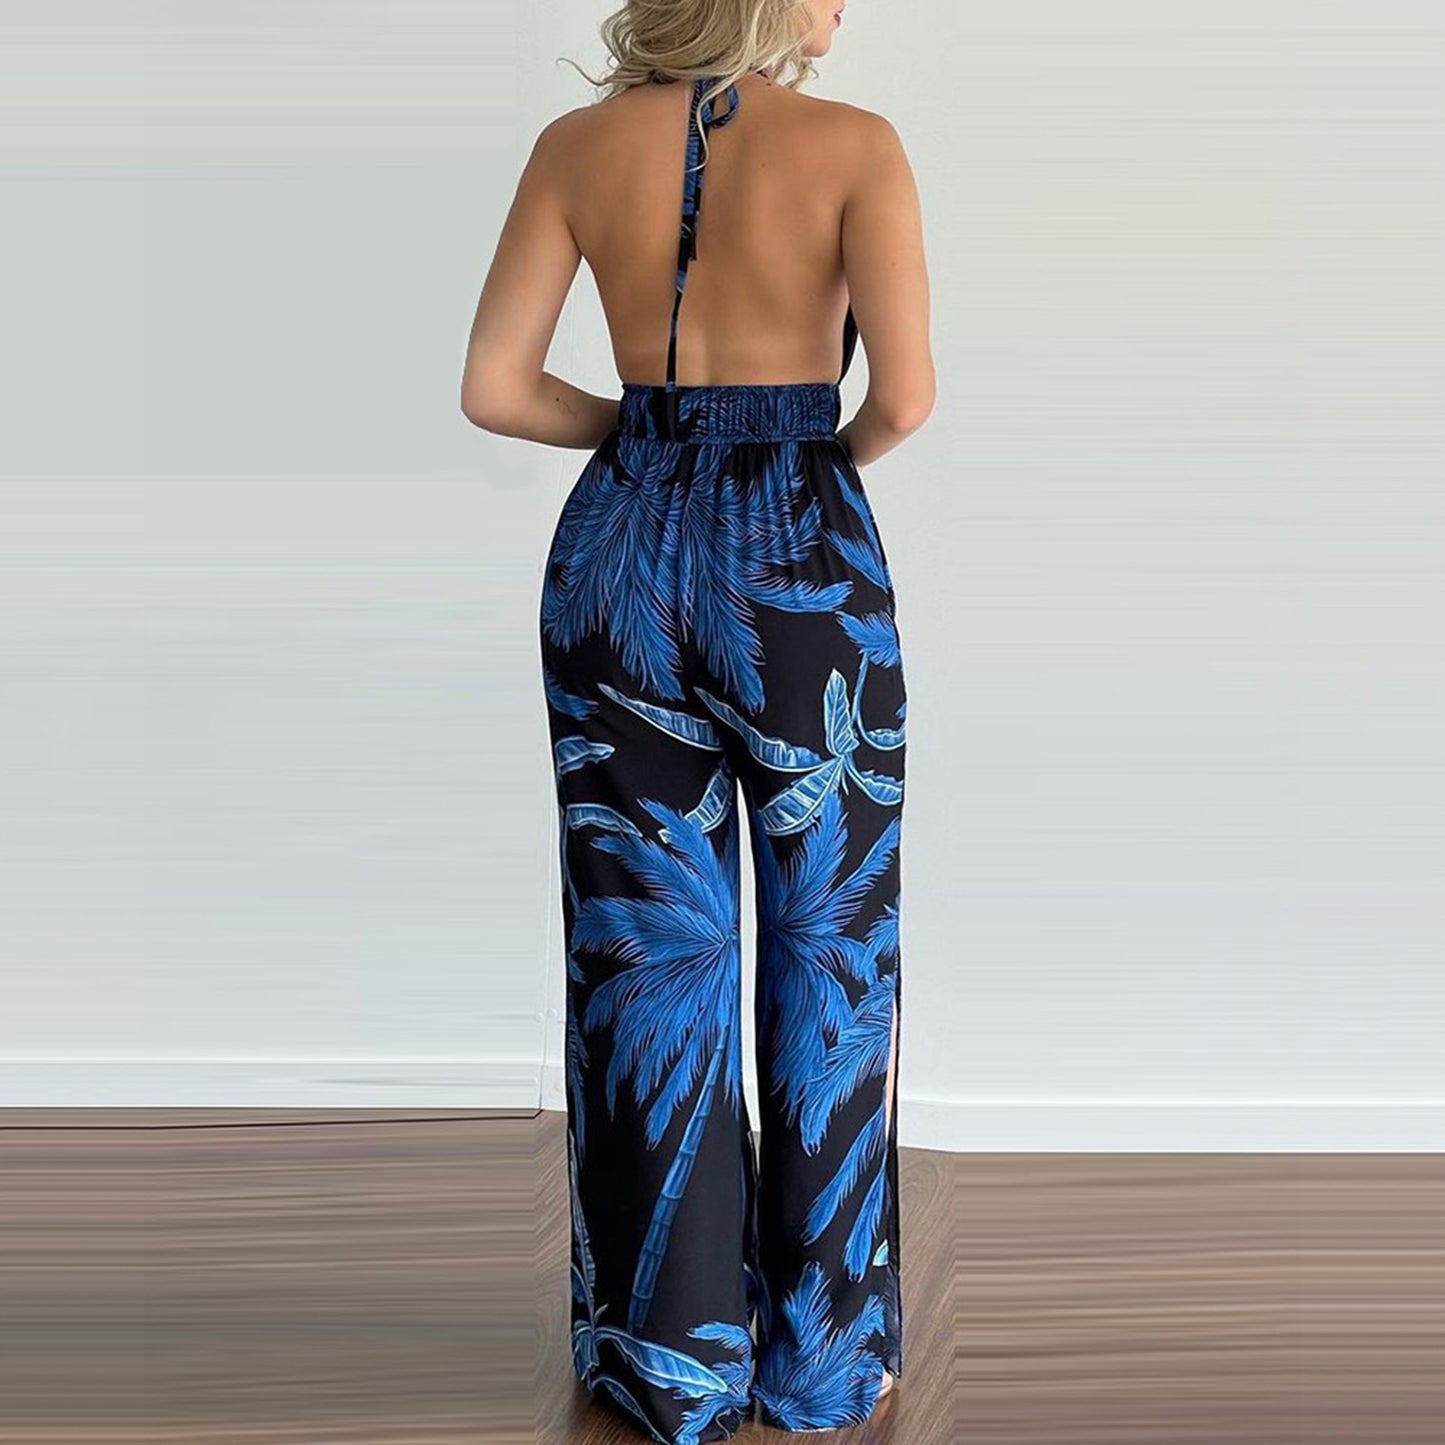 YESFASHION Women's Dress Wish Digital Printing Colorful Jumpsuit